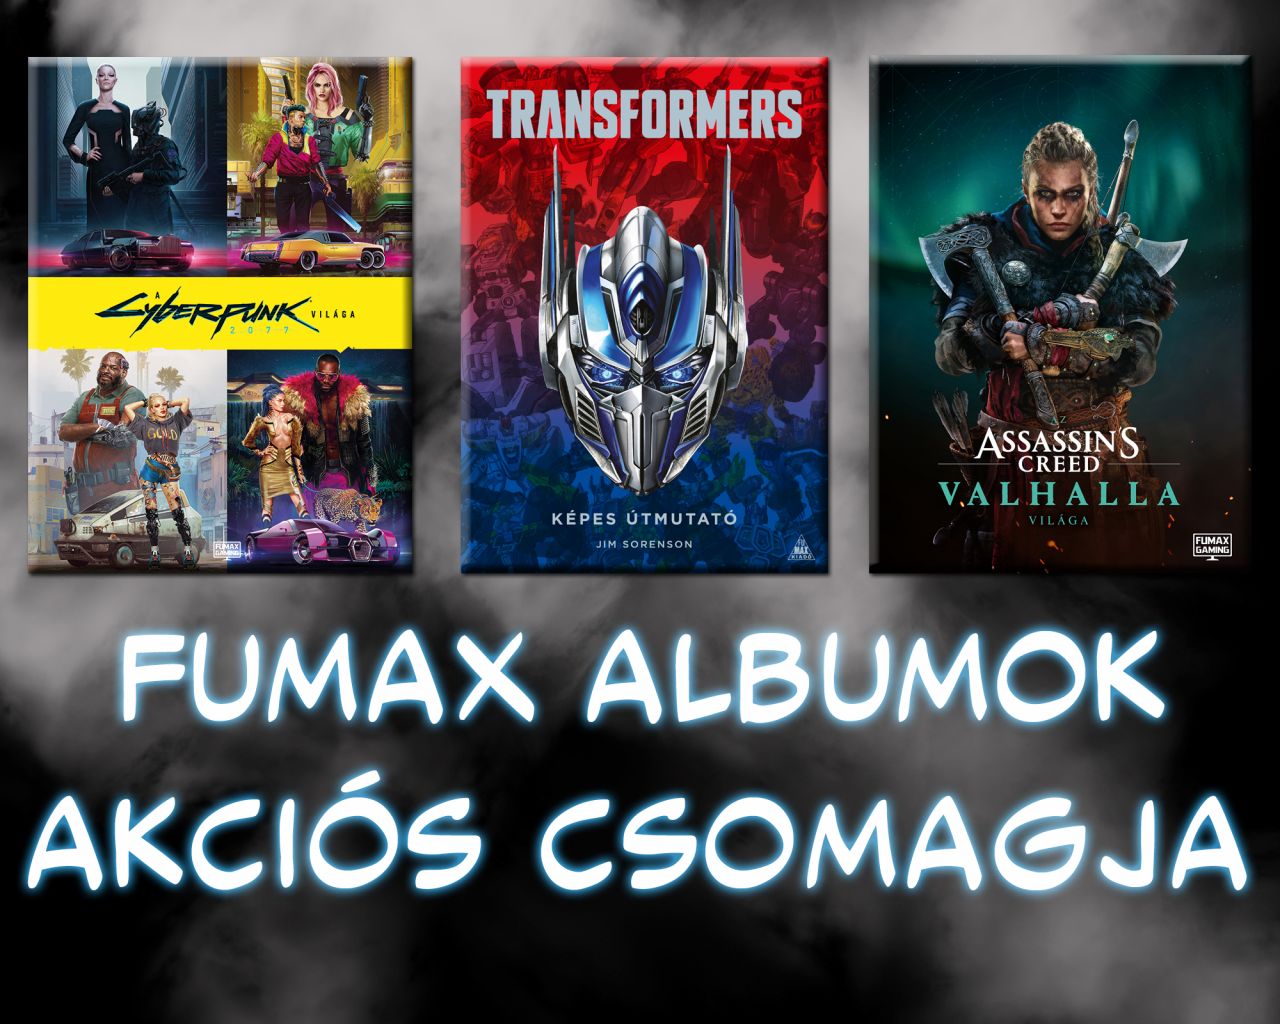 Fumax albumok akciós csomag 